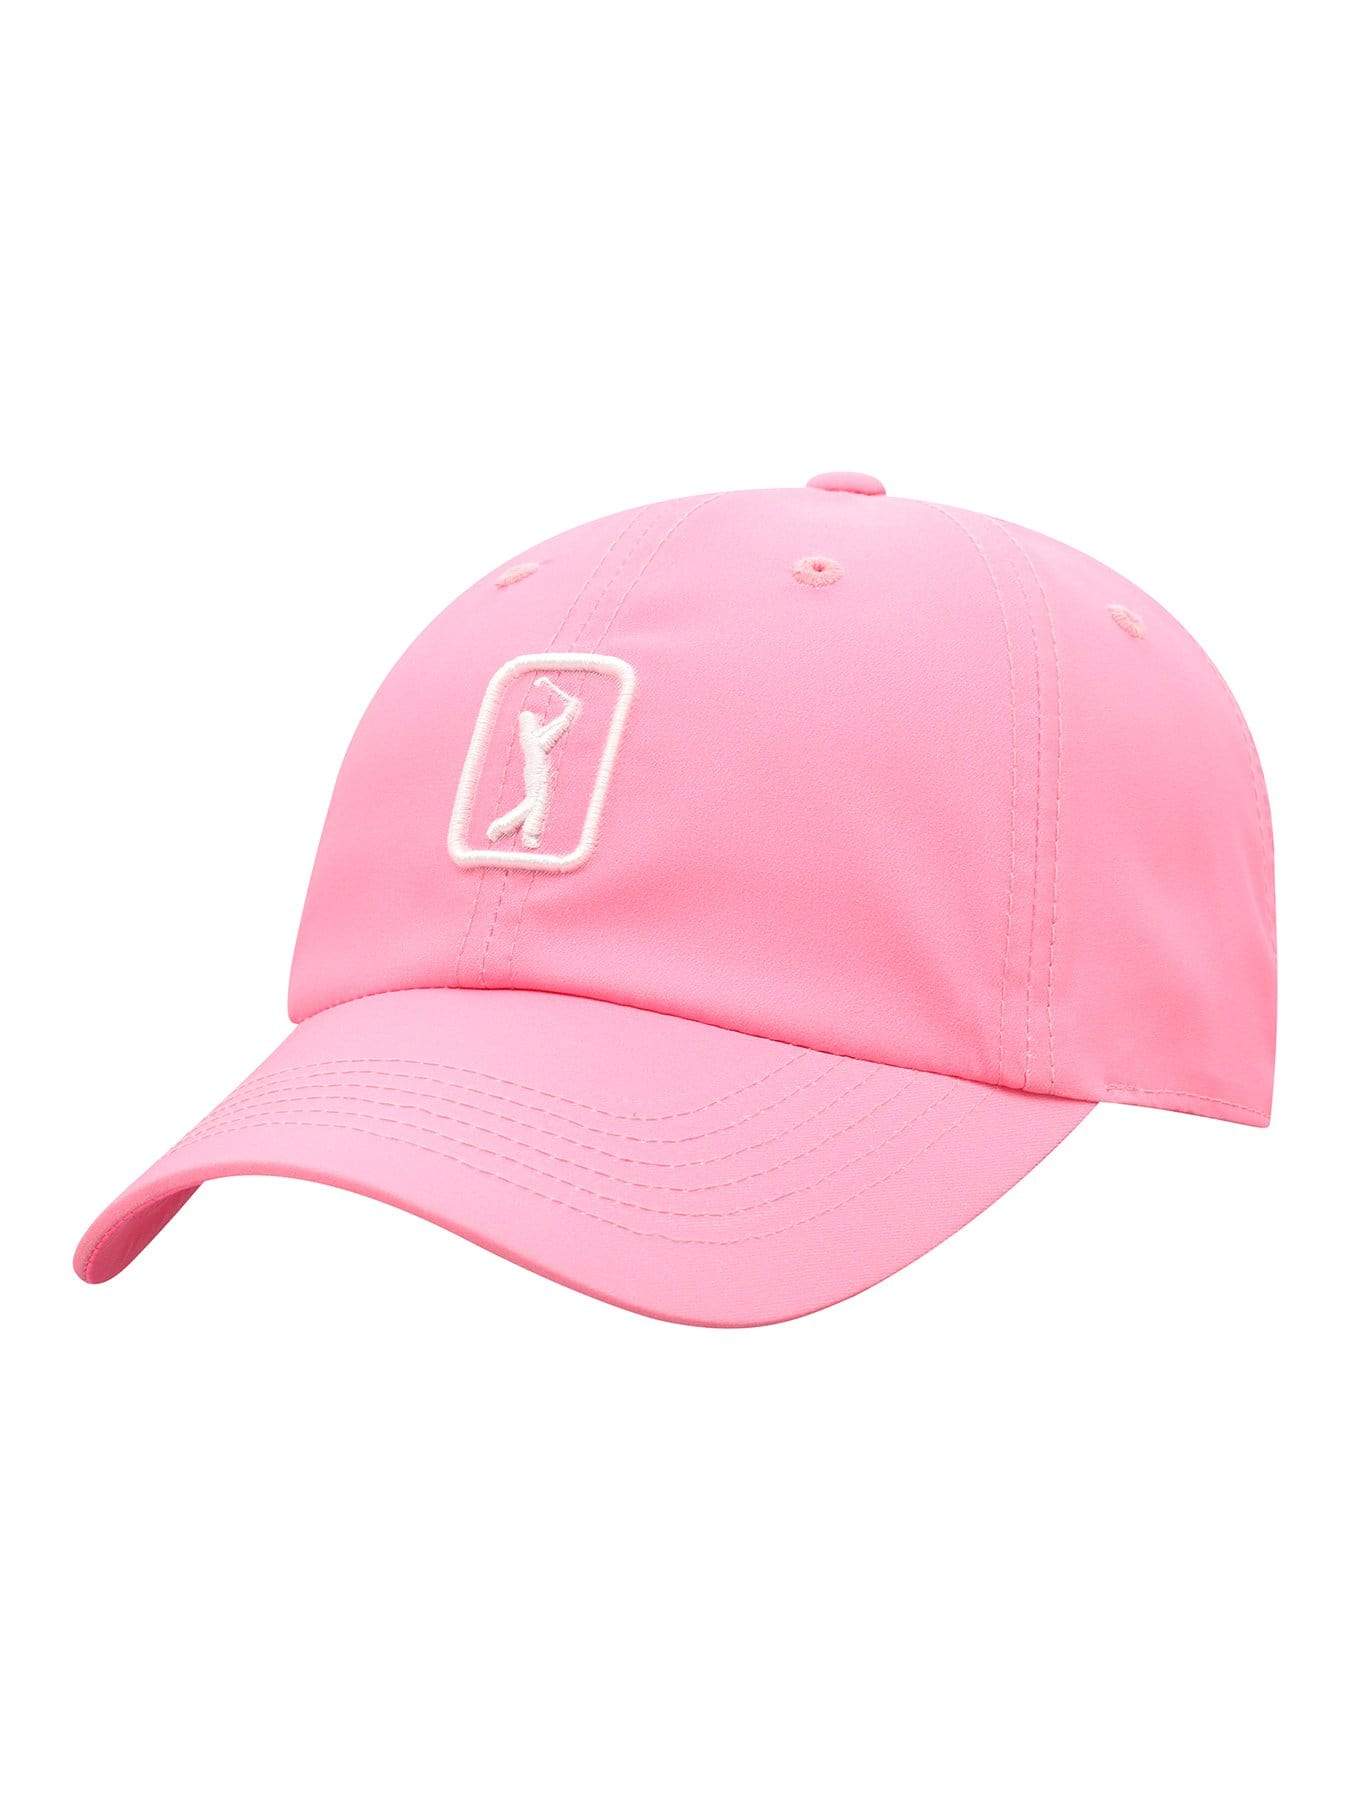 PGA TOUR Apparel Womens Classic Logo Adjustable Hat, Pink | Golf Apparel Shop